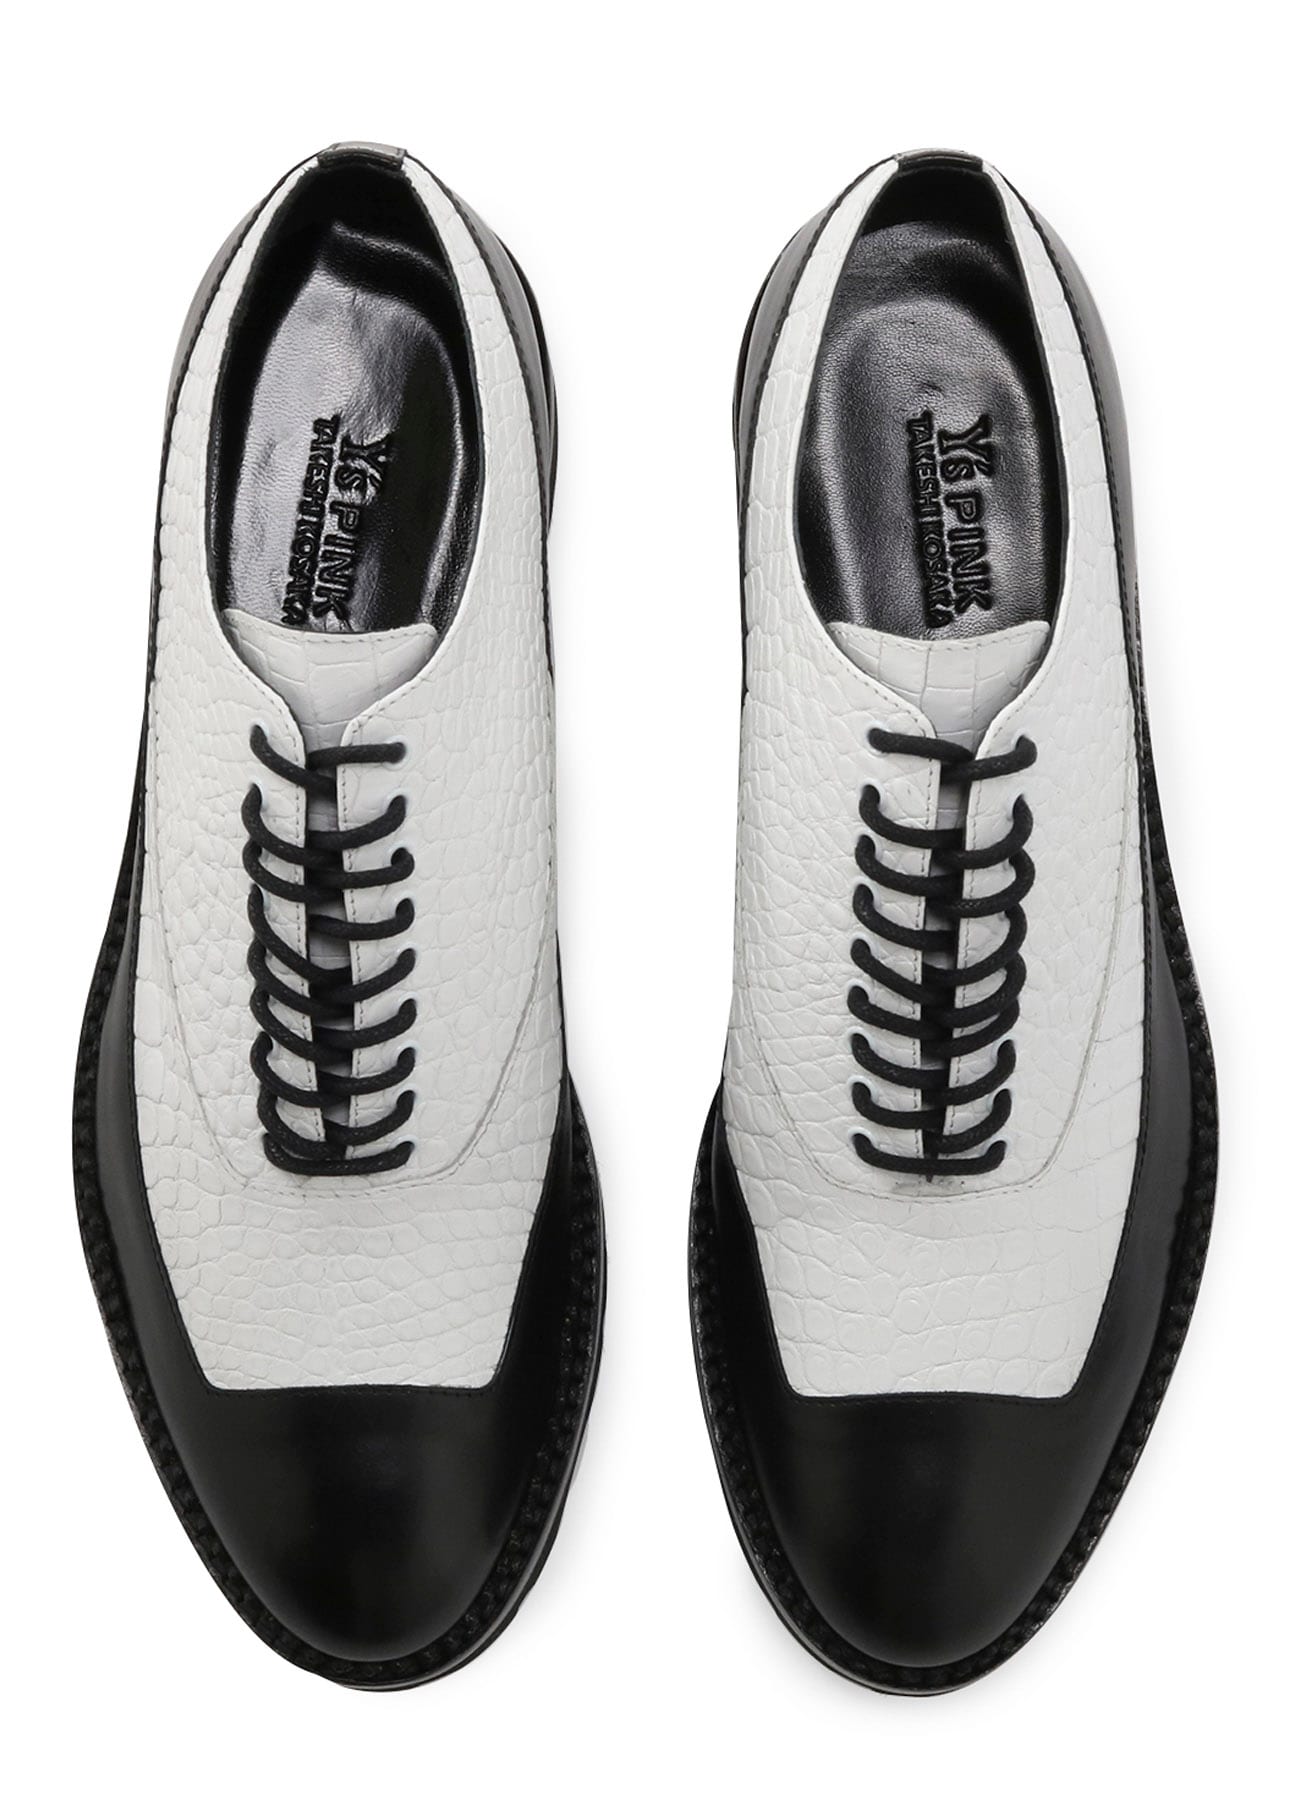 Y's PINK FMS Leather Short Shoes (22.5cm White x Black): Vintage 